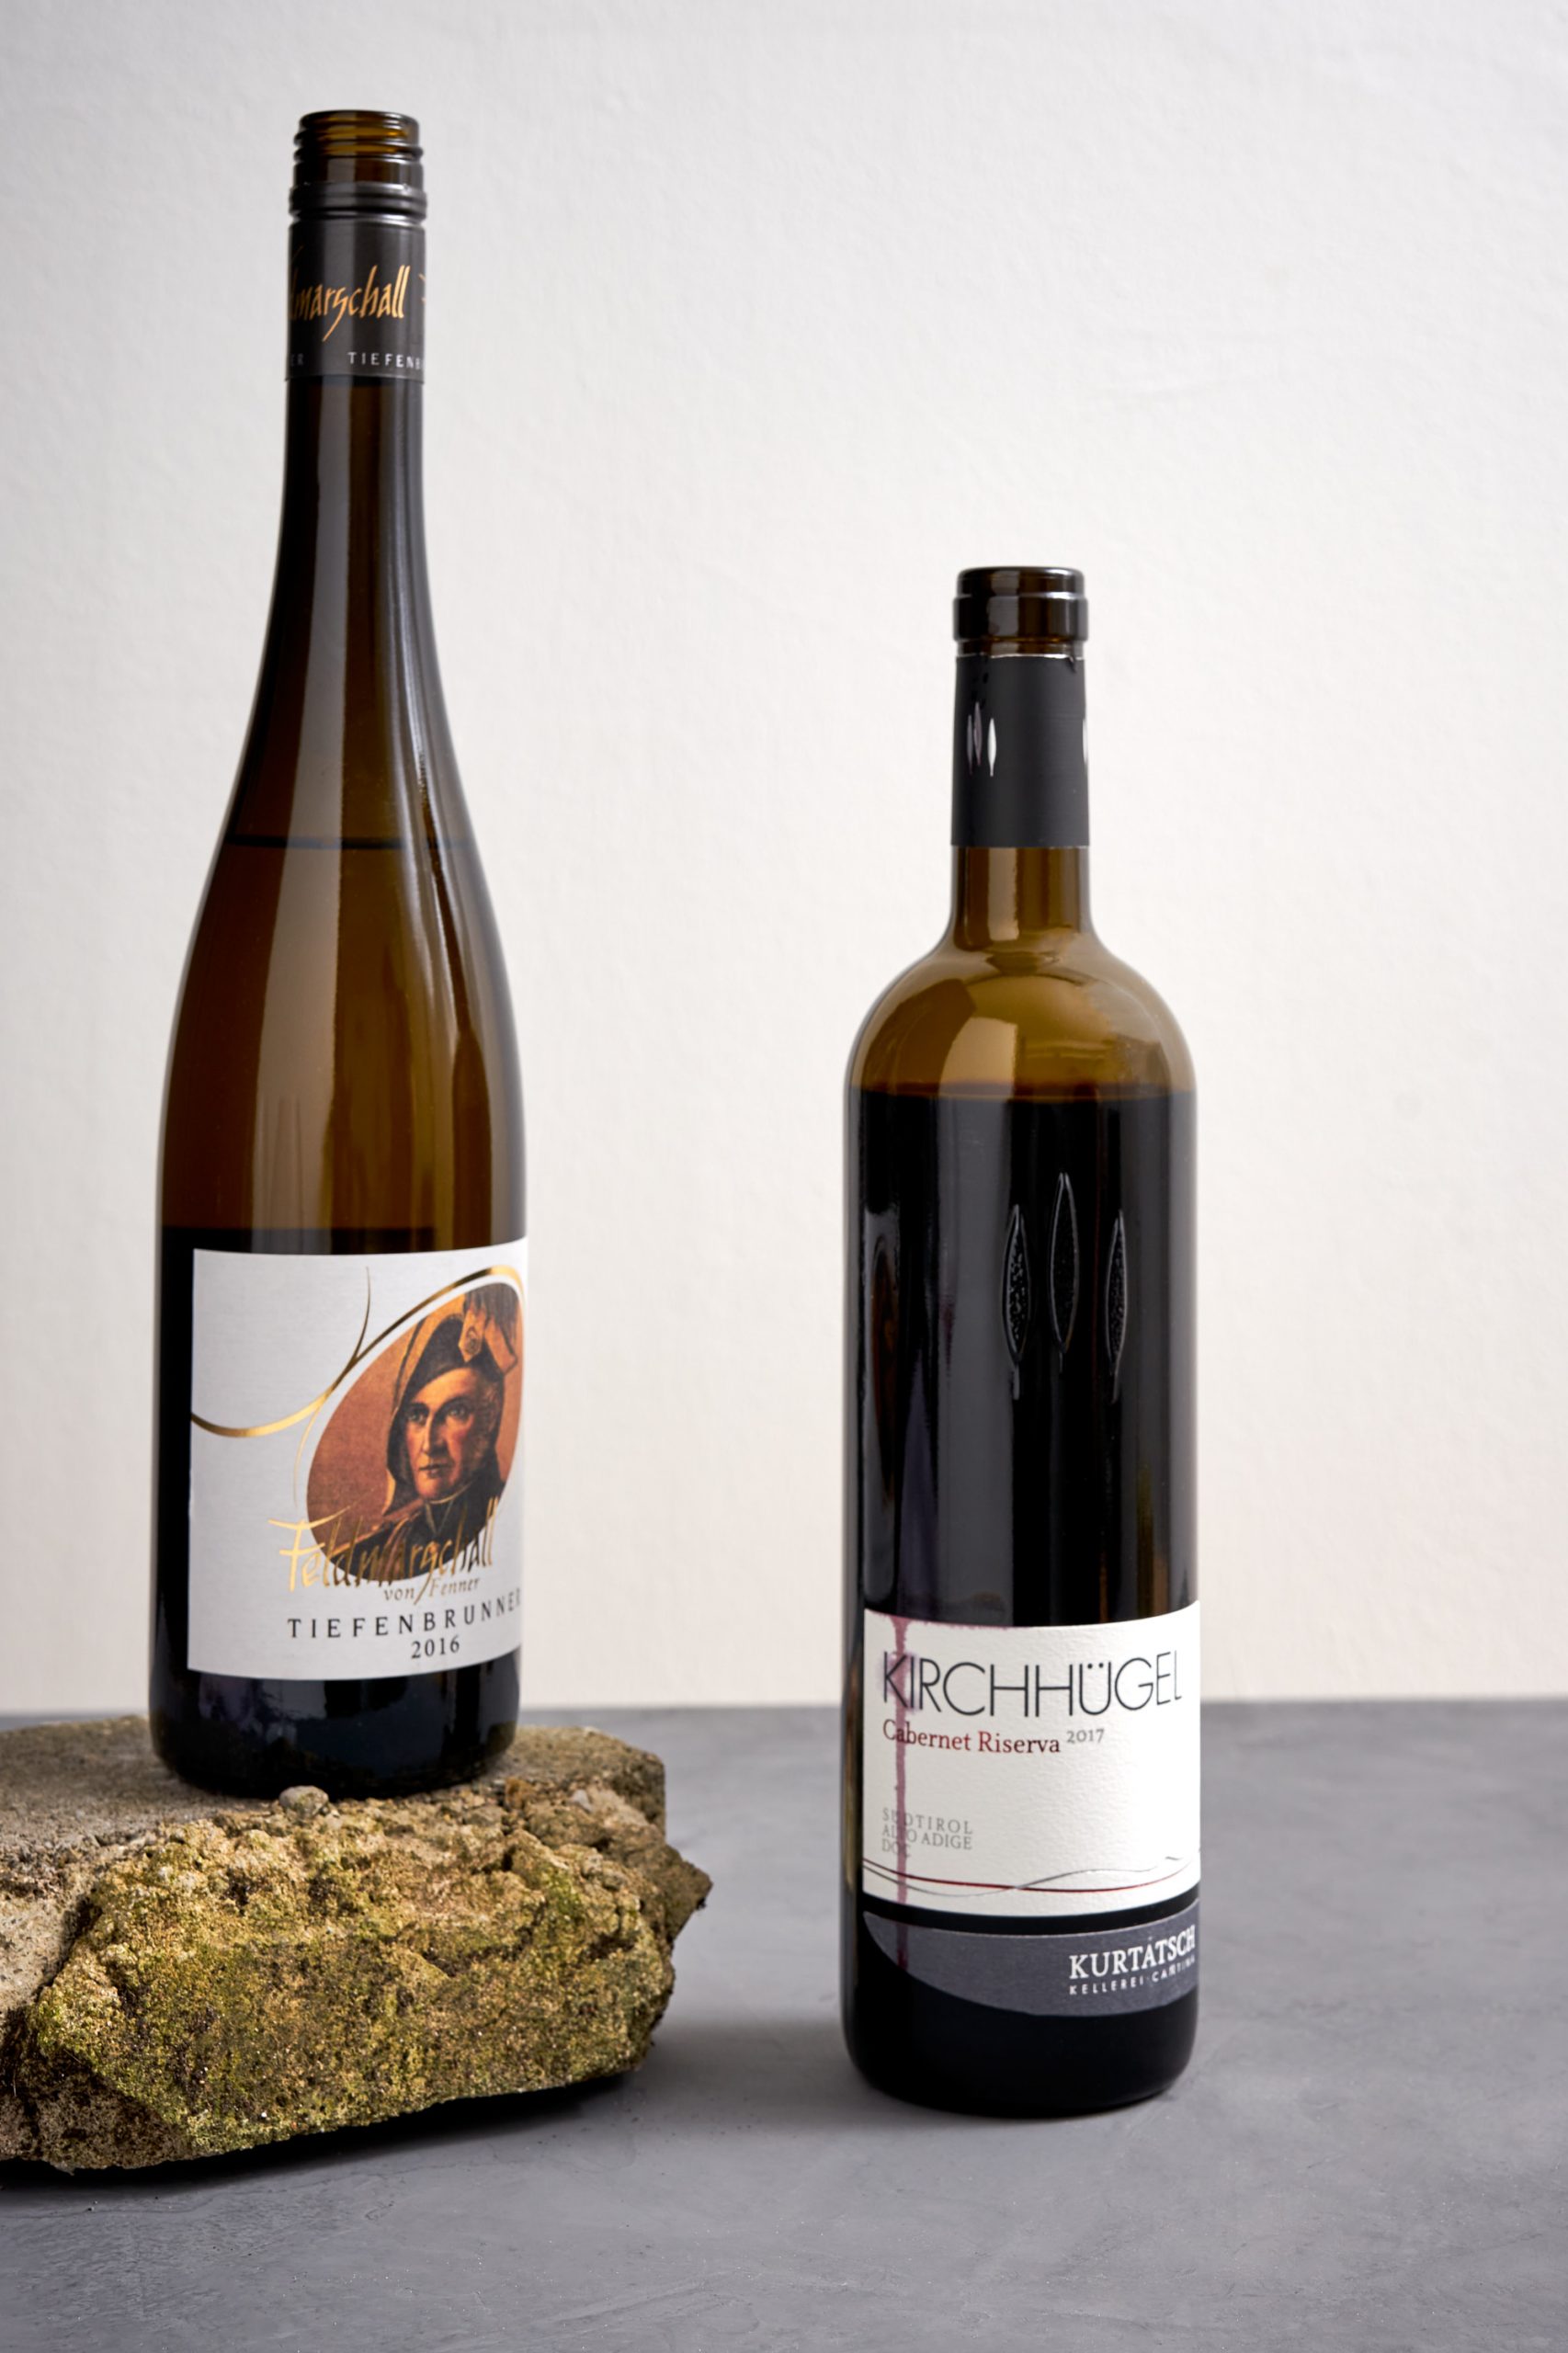 Wein aus Südtirol: Tiefenbrunner Müller Thurgau Feldmarschall und Kellerei Kurtatsch Cabernet Riserva Kirchhügel